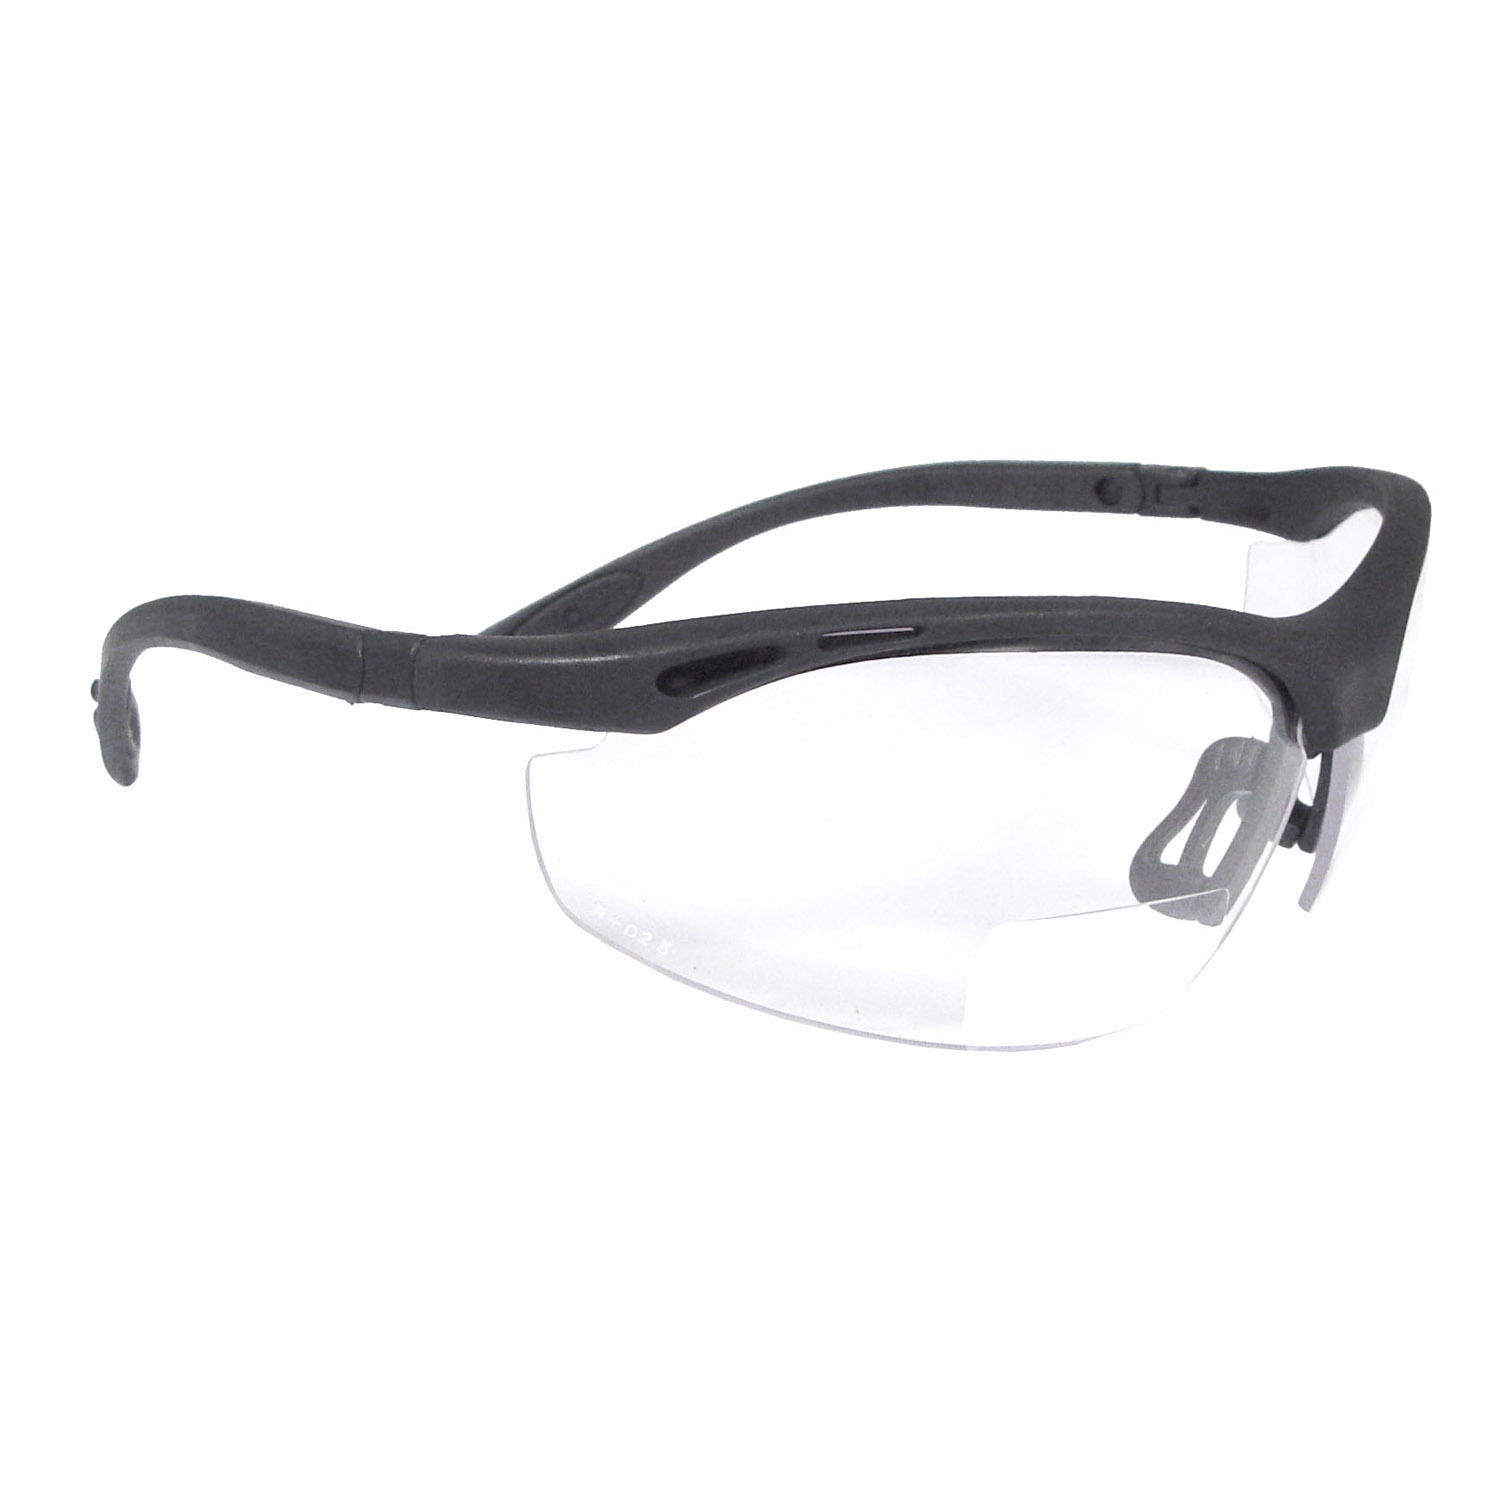 Cheaters® Bi-Focal Eyewear - Black Frame - Clear Lens - 3.0 Diopter